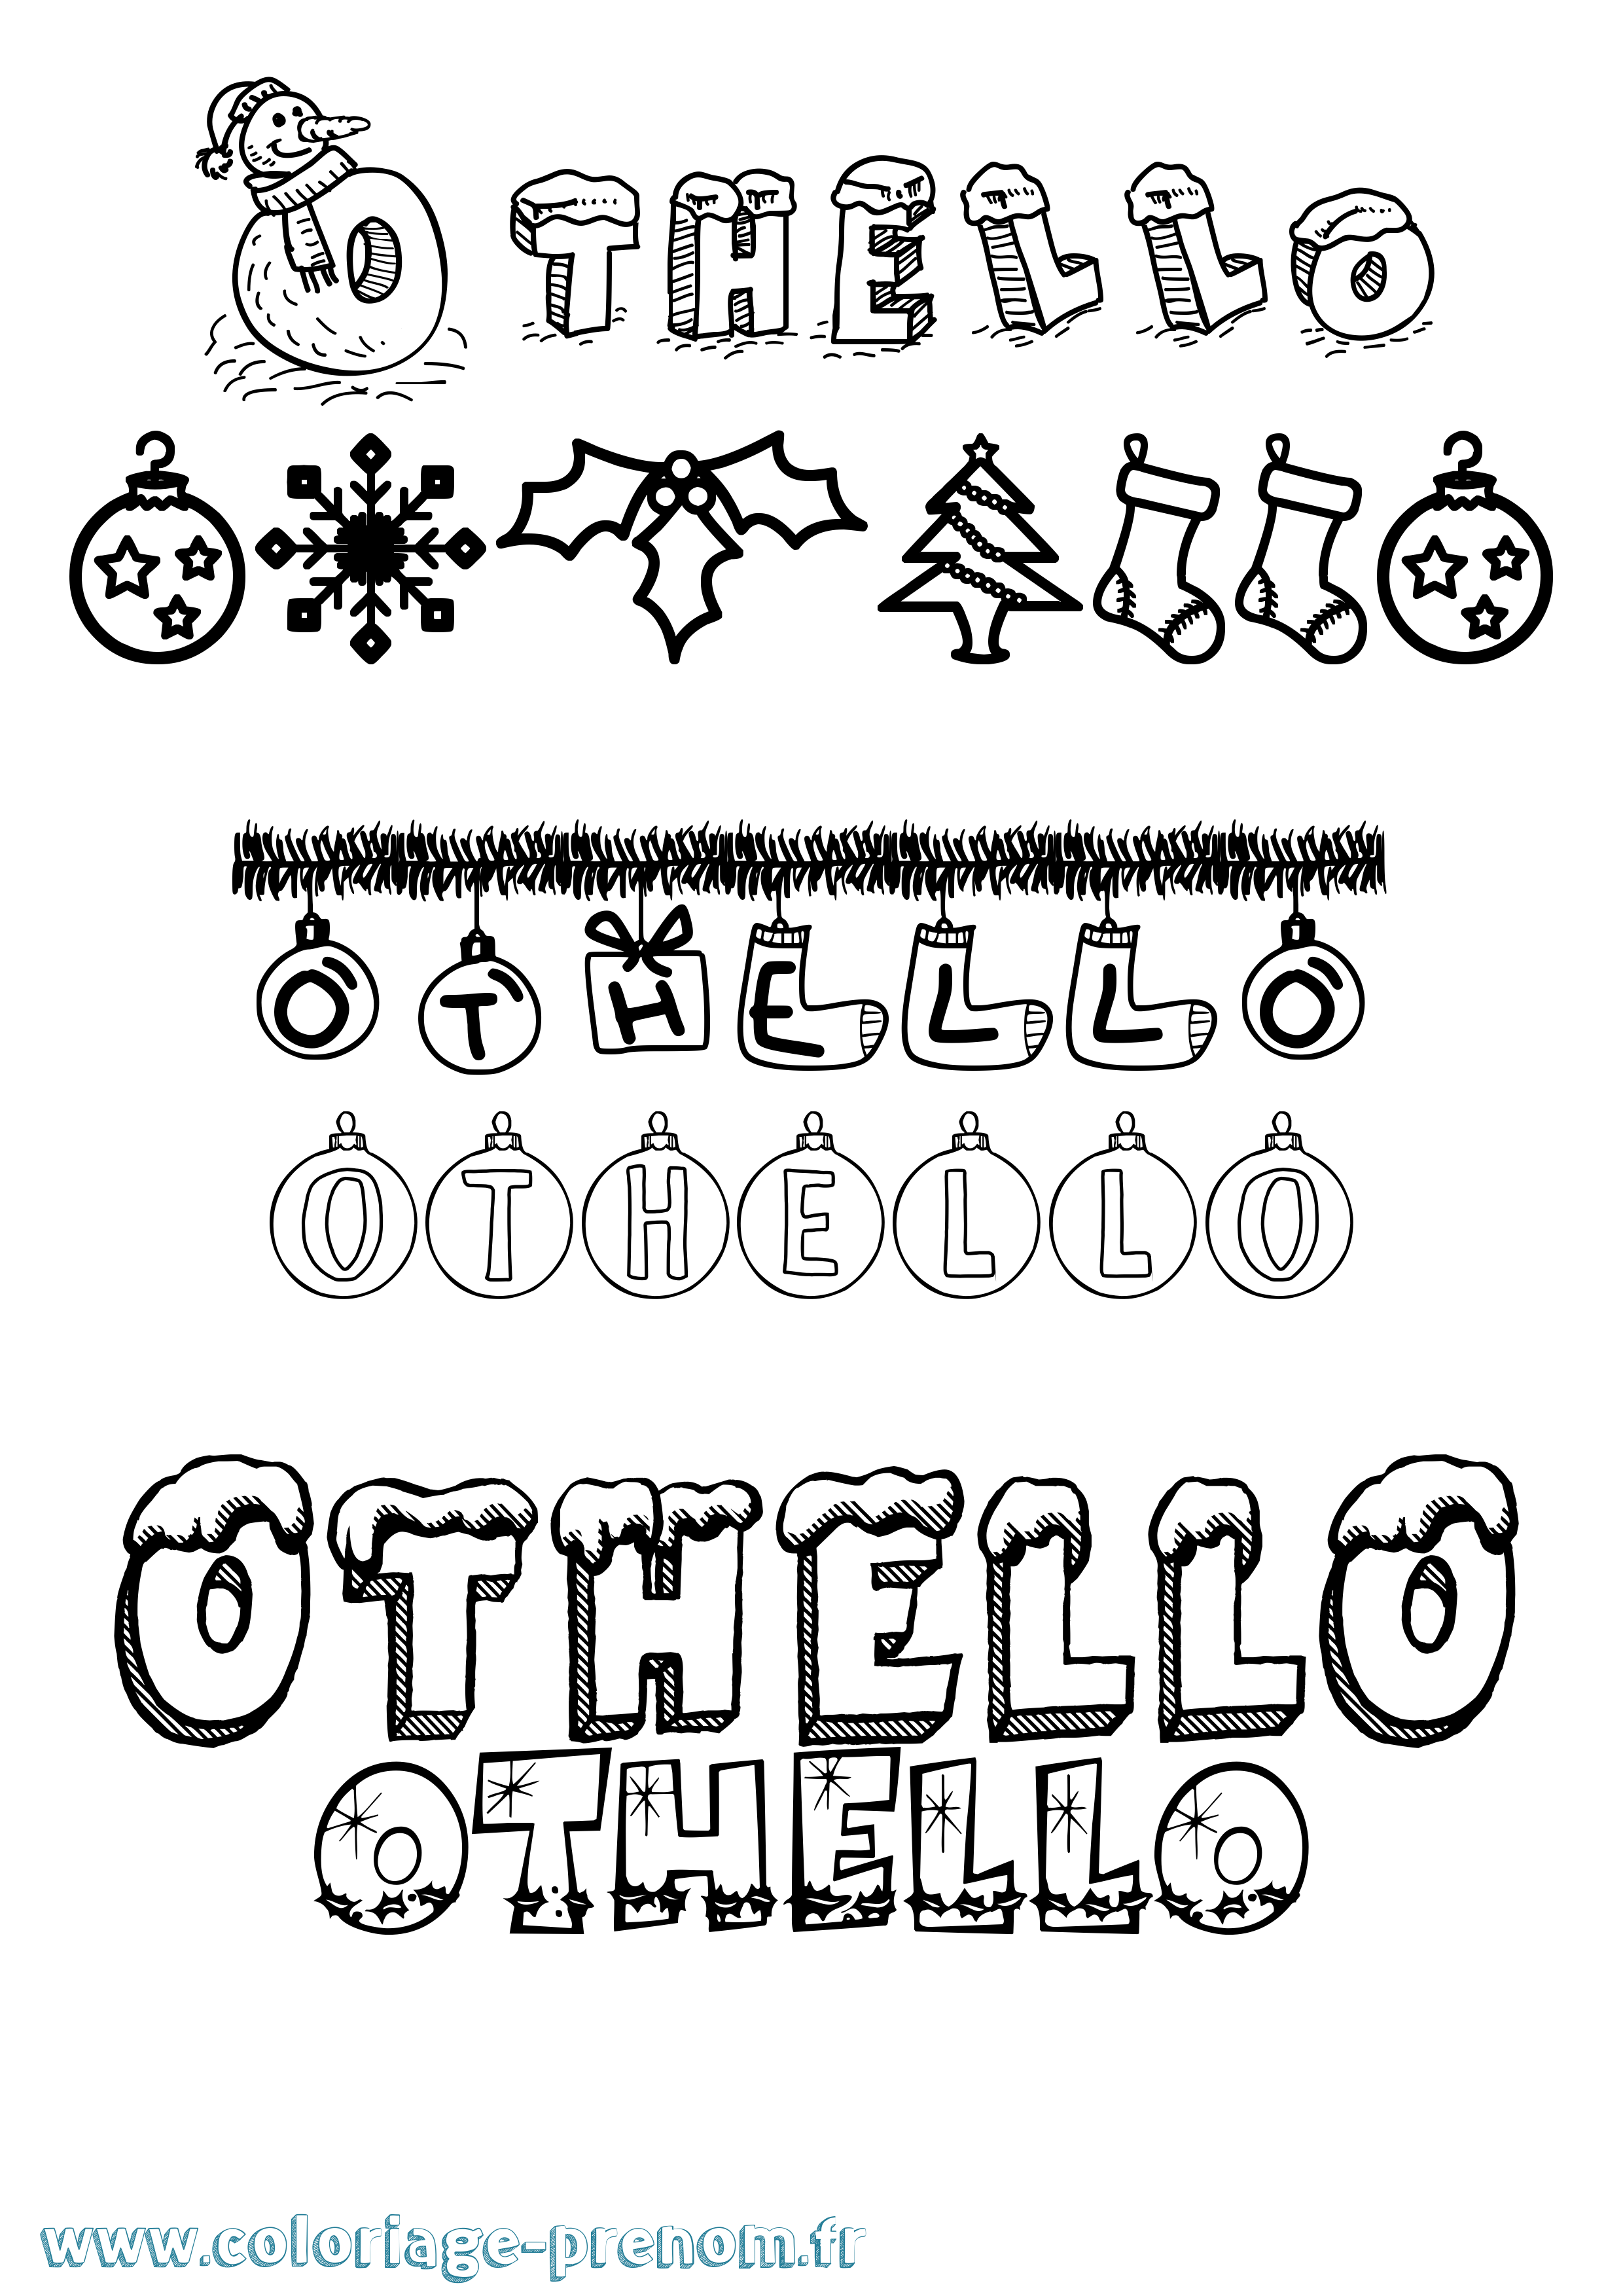 Coloriage prénom Othello Noël